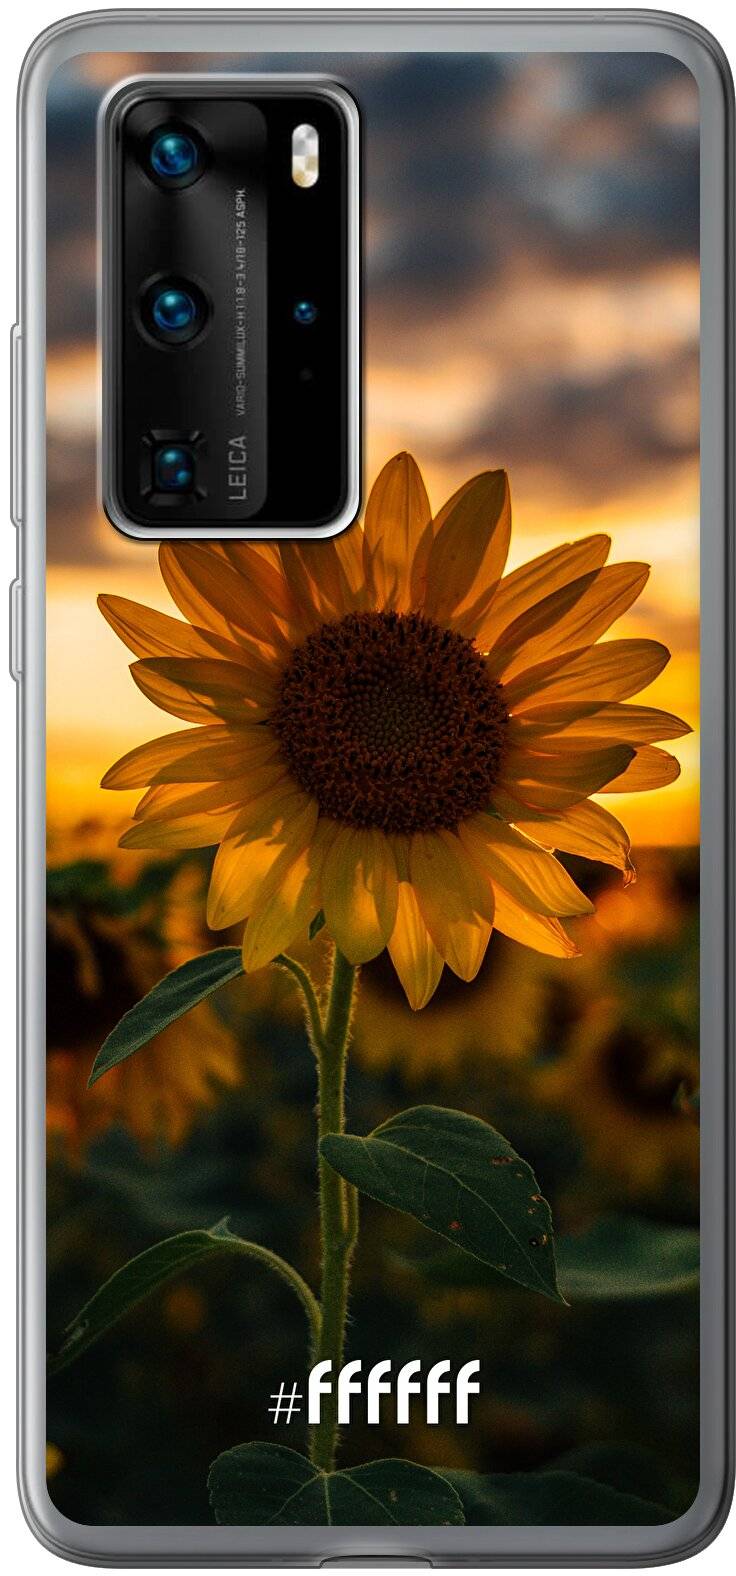 Sunset Sunflower P40 Pro